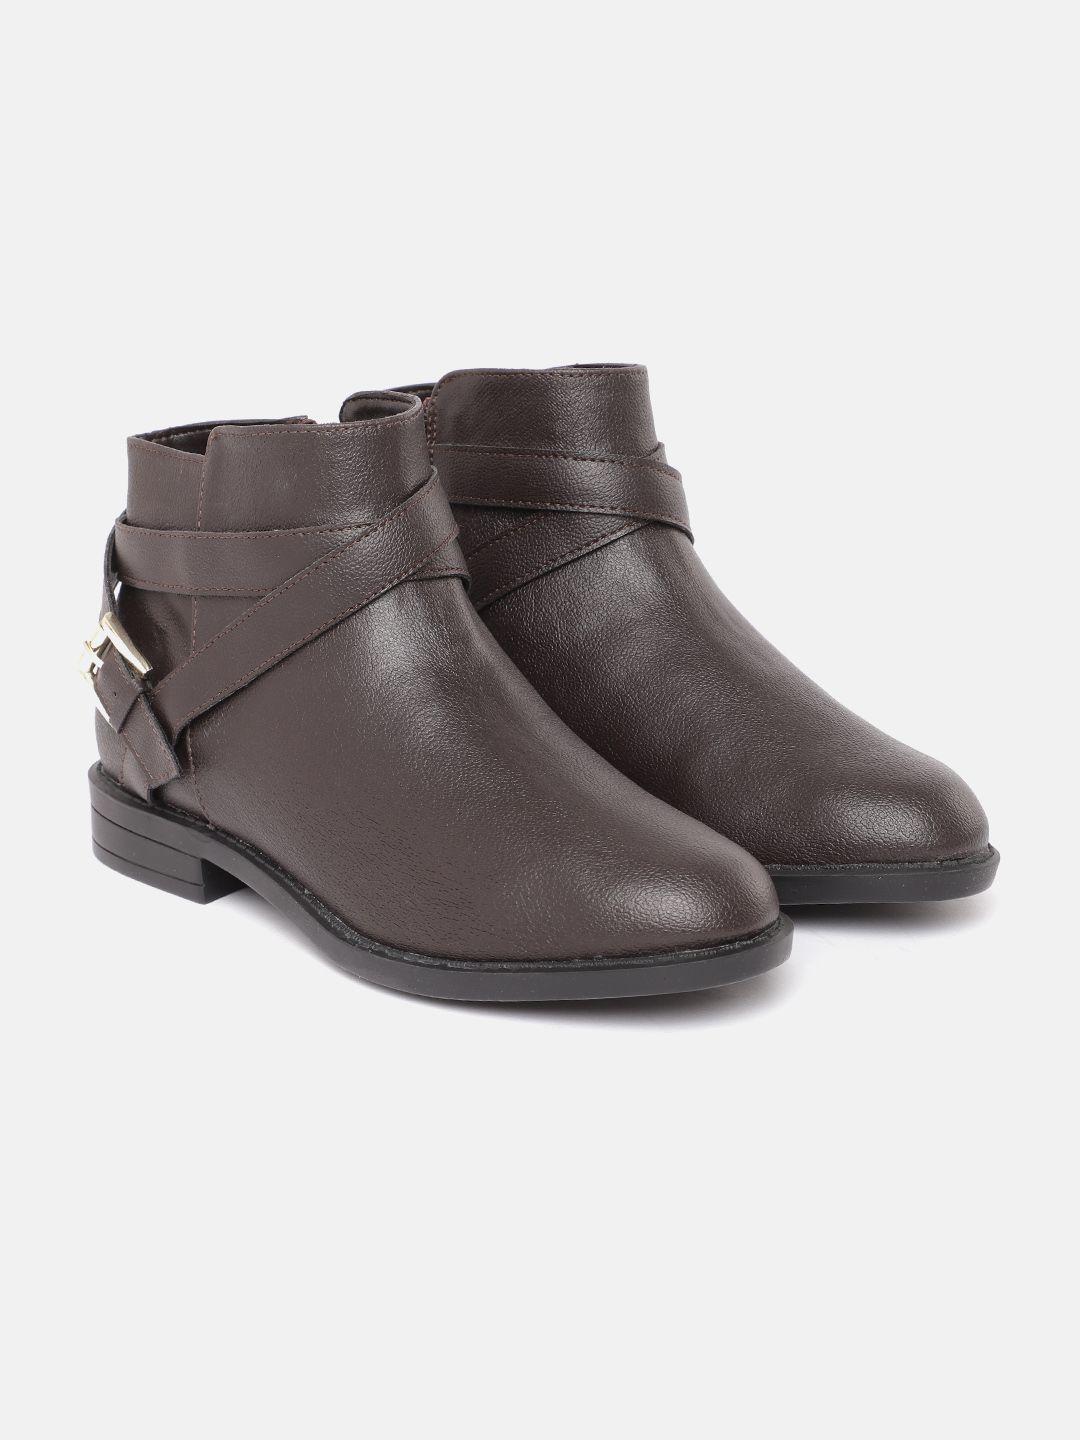 carlton-london-women-coffee-brown-solid-mid-top-regular-boots